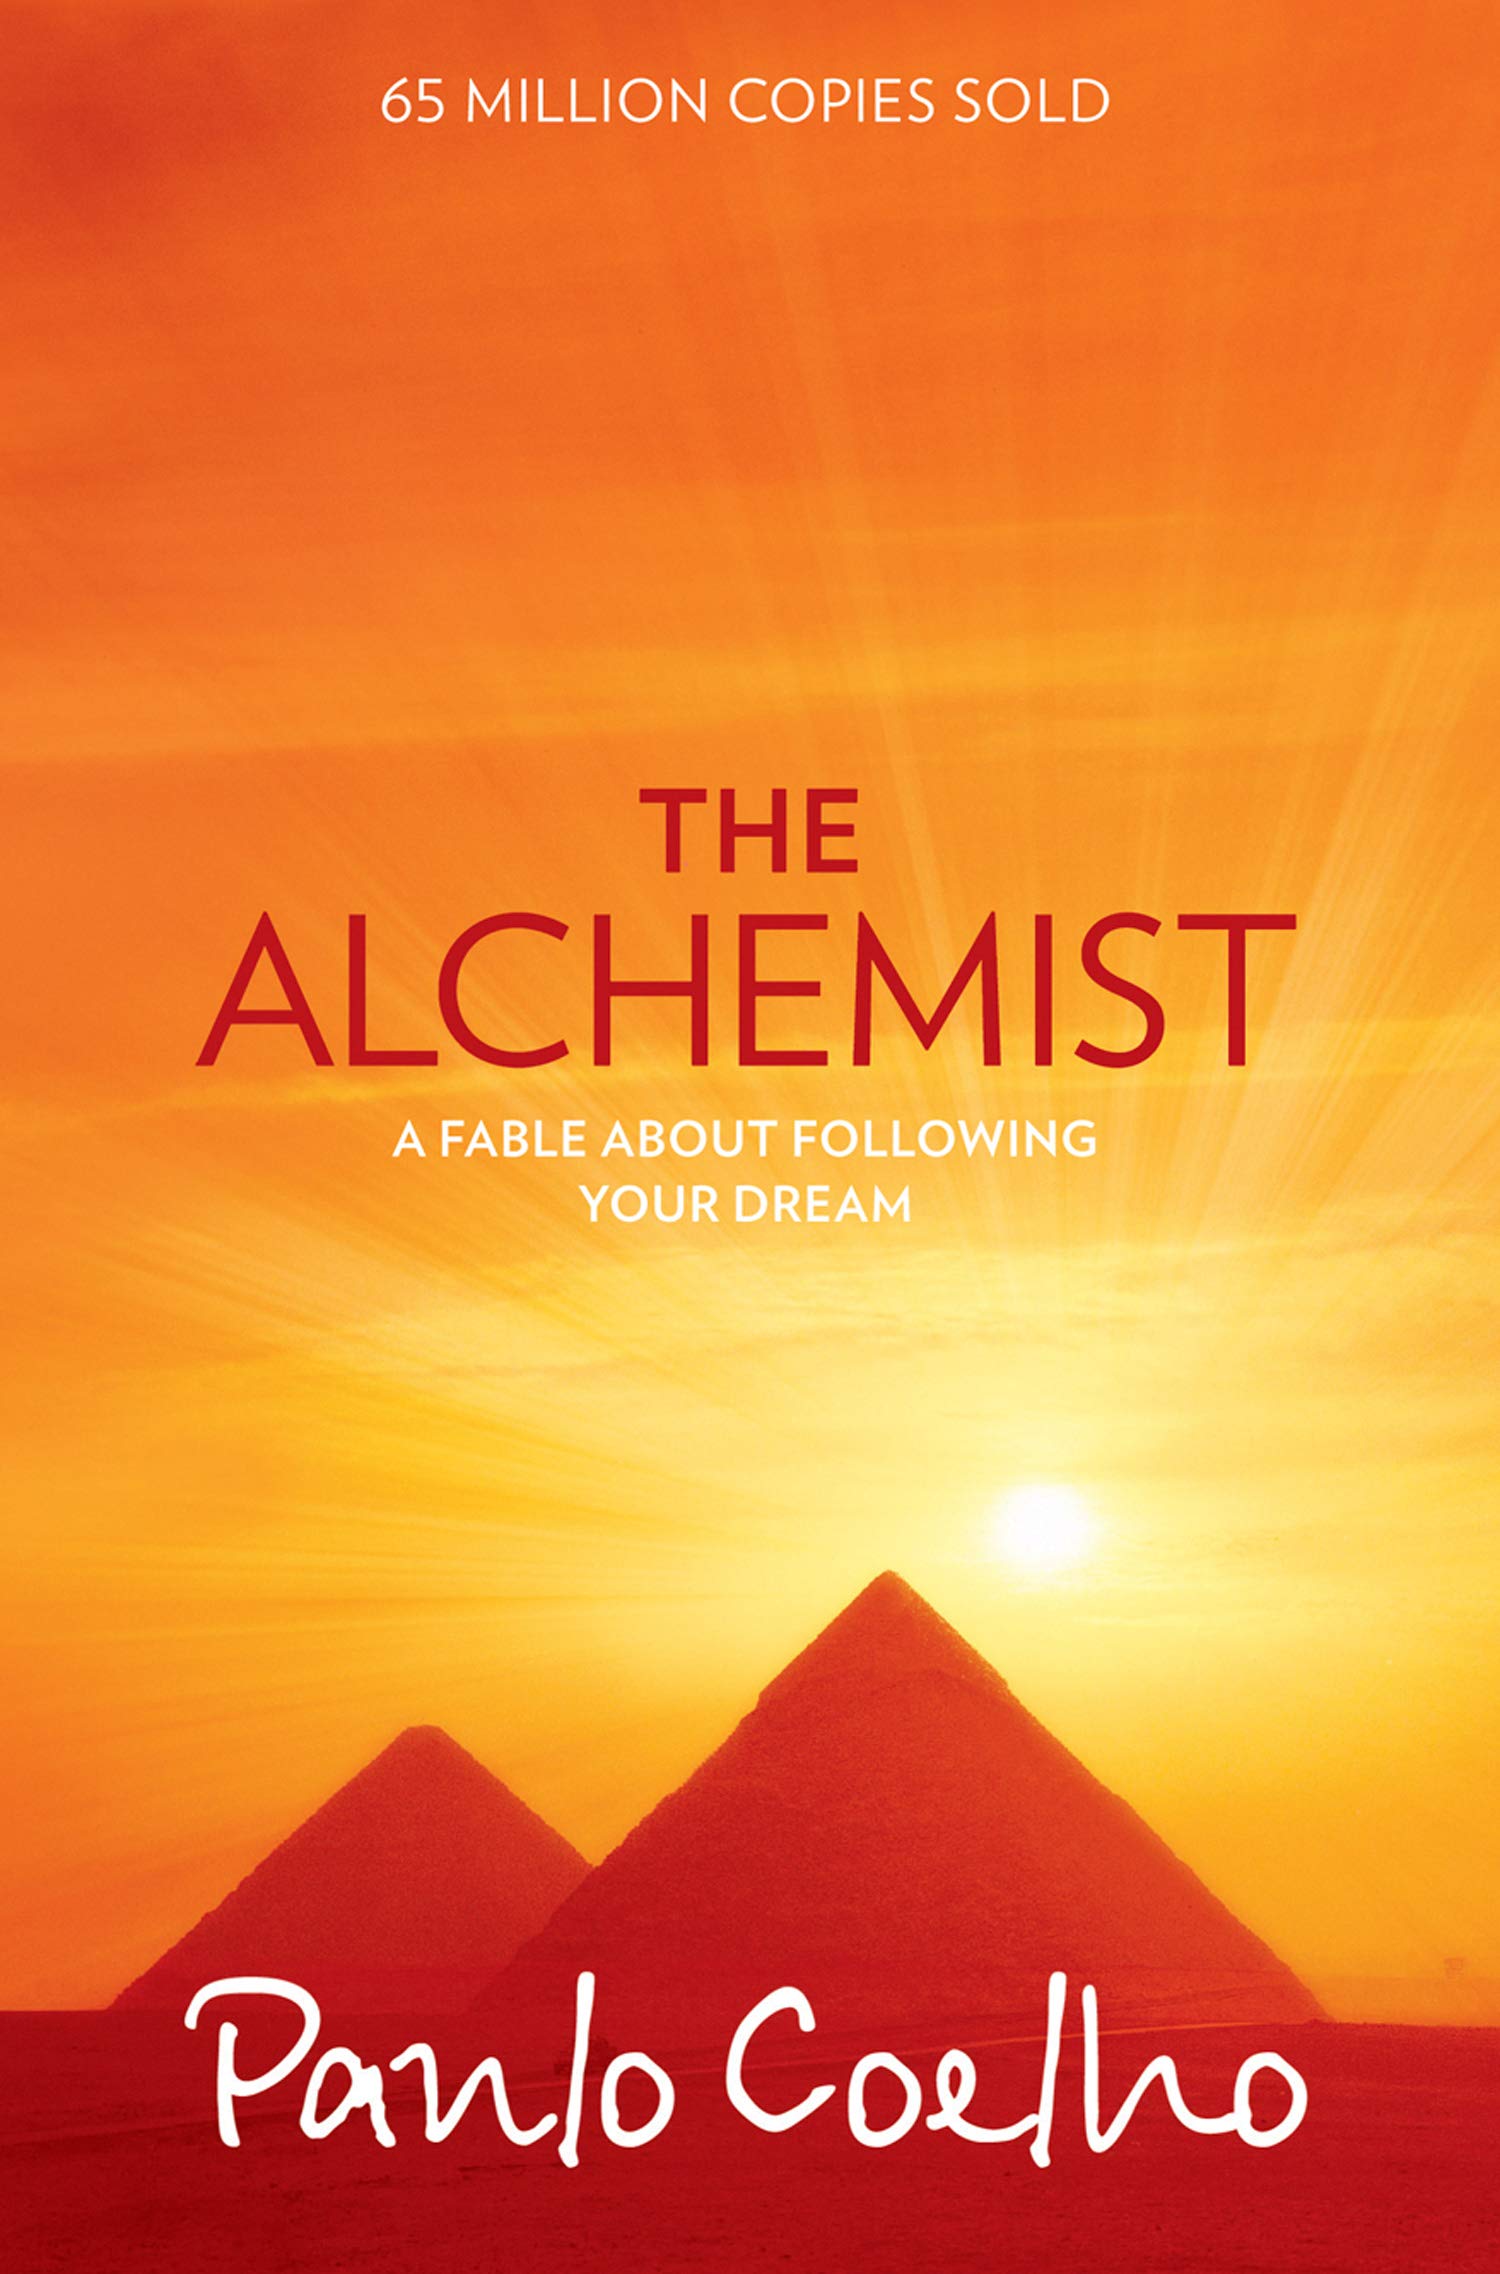 The alchemist book review pdf book